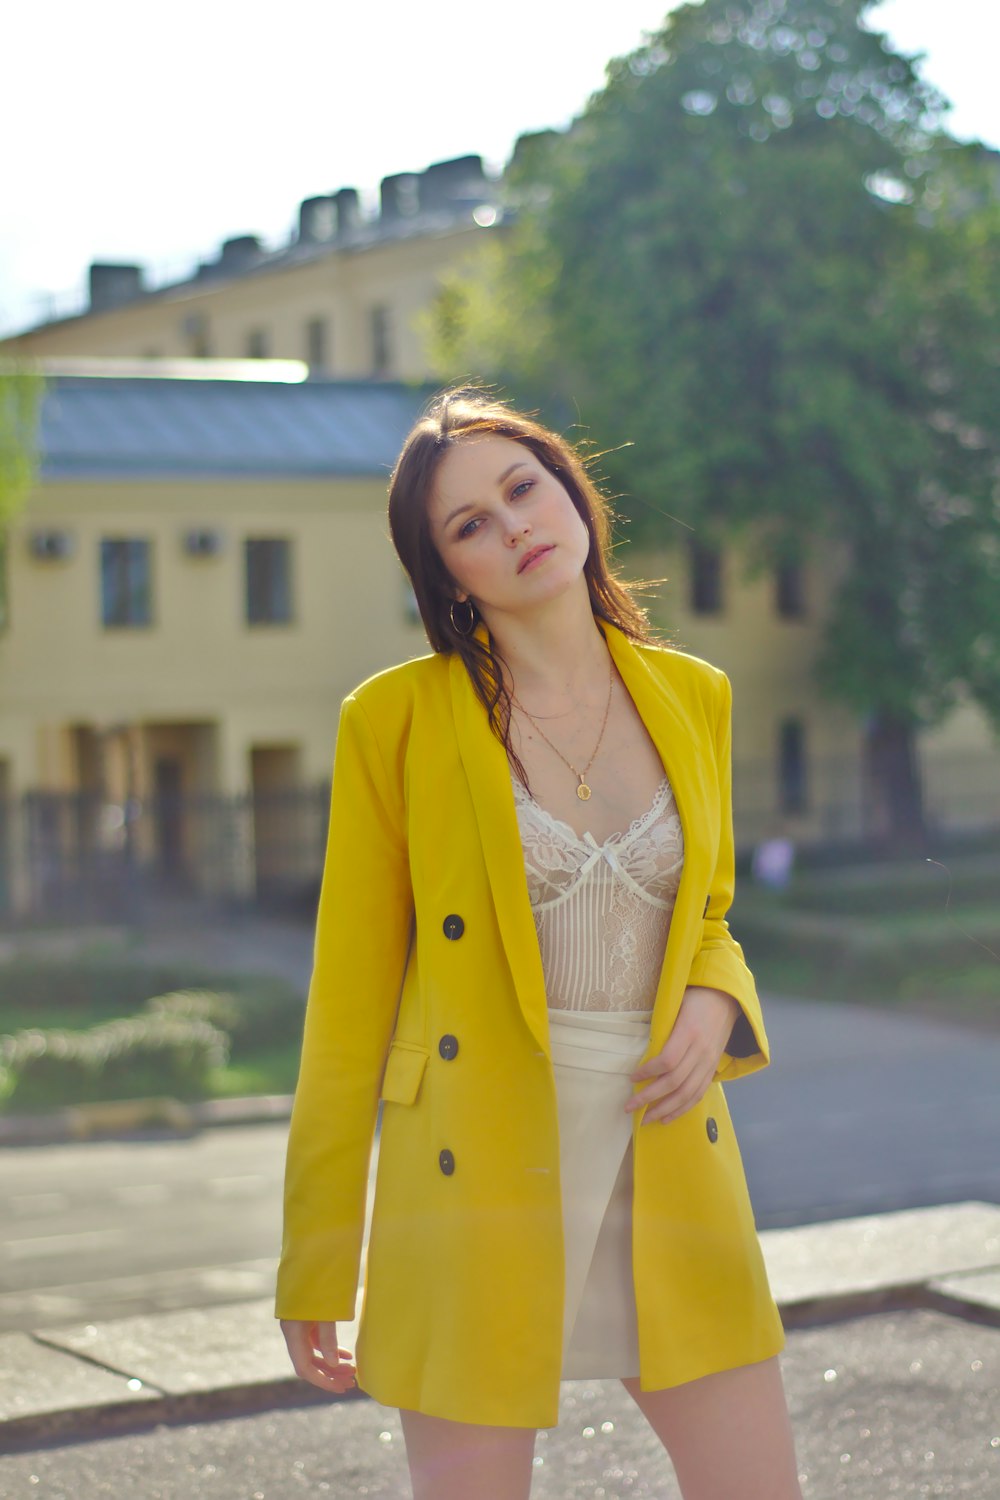 Foto Mujer viste abrigo amarillo Muchacha gratis en Unsplash